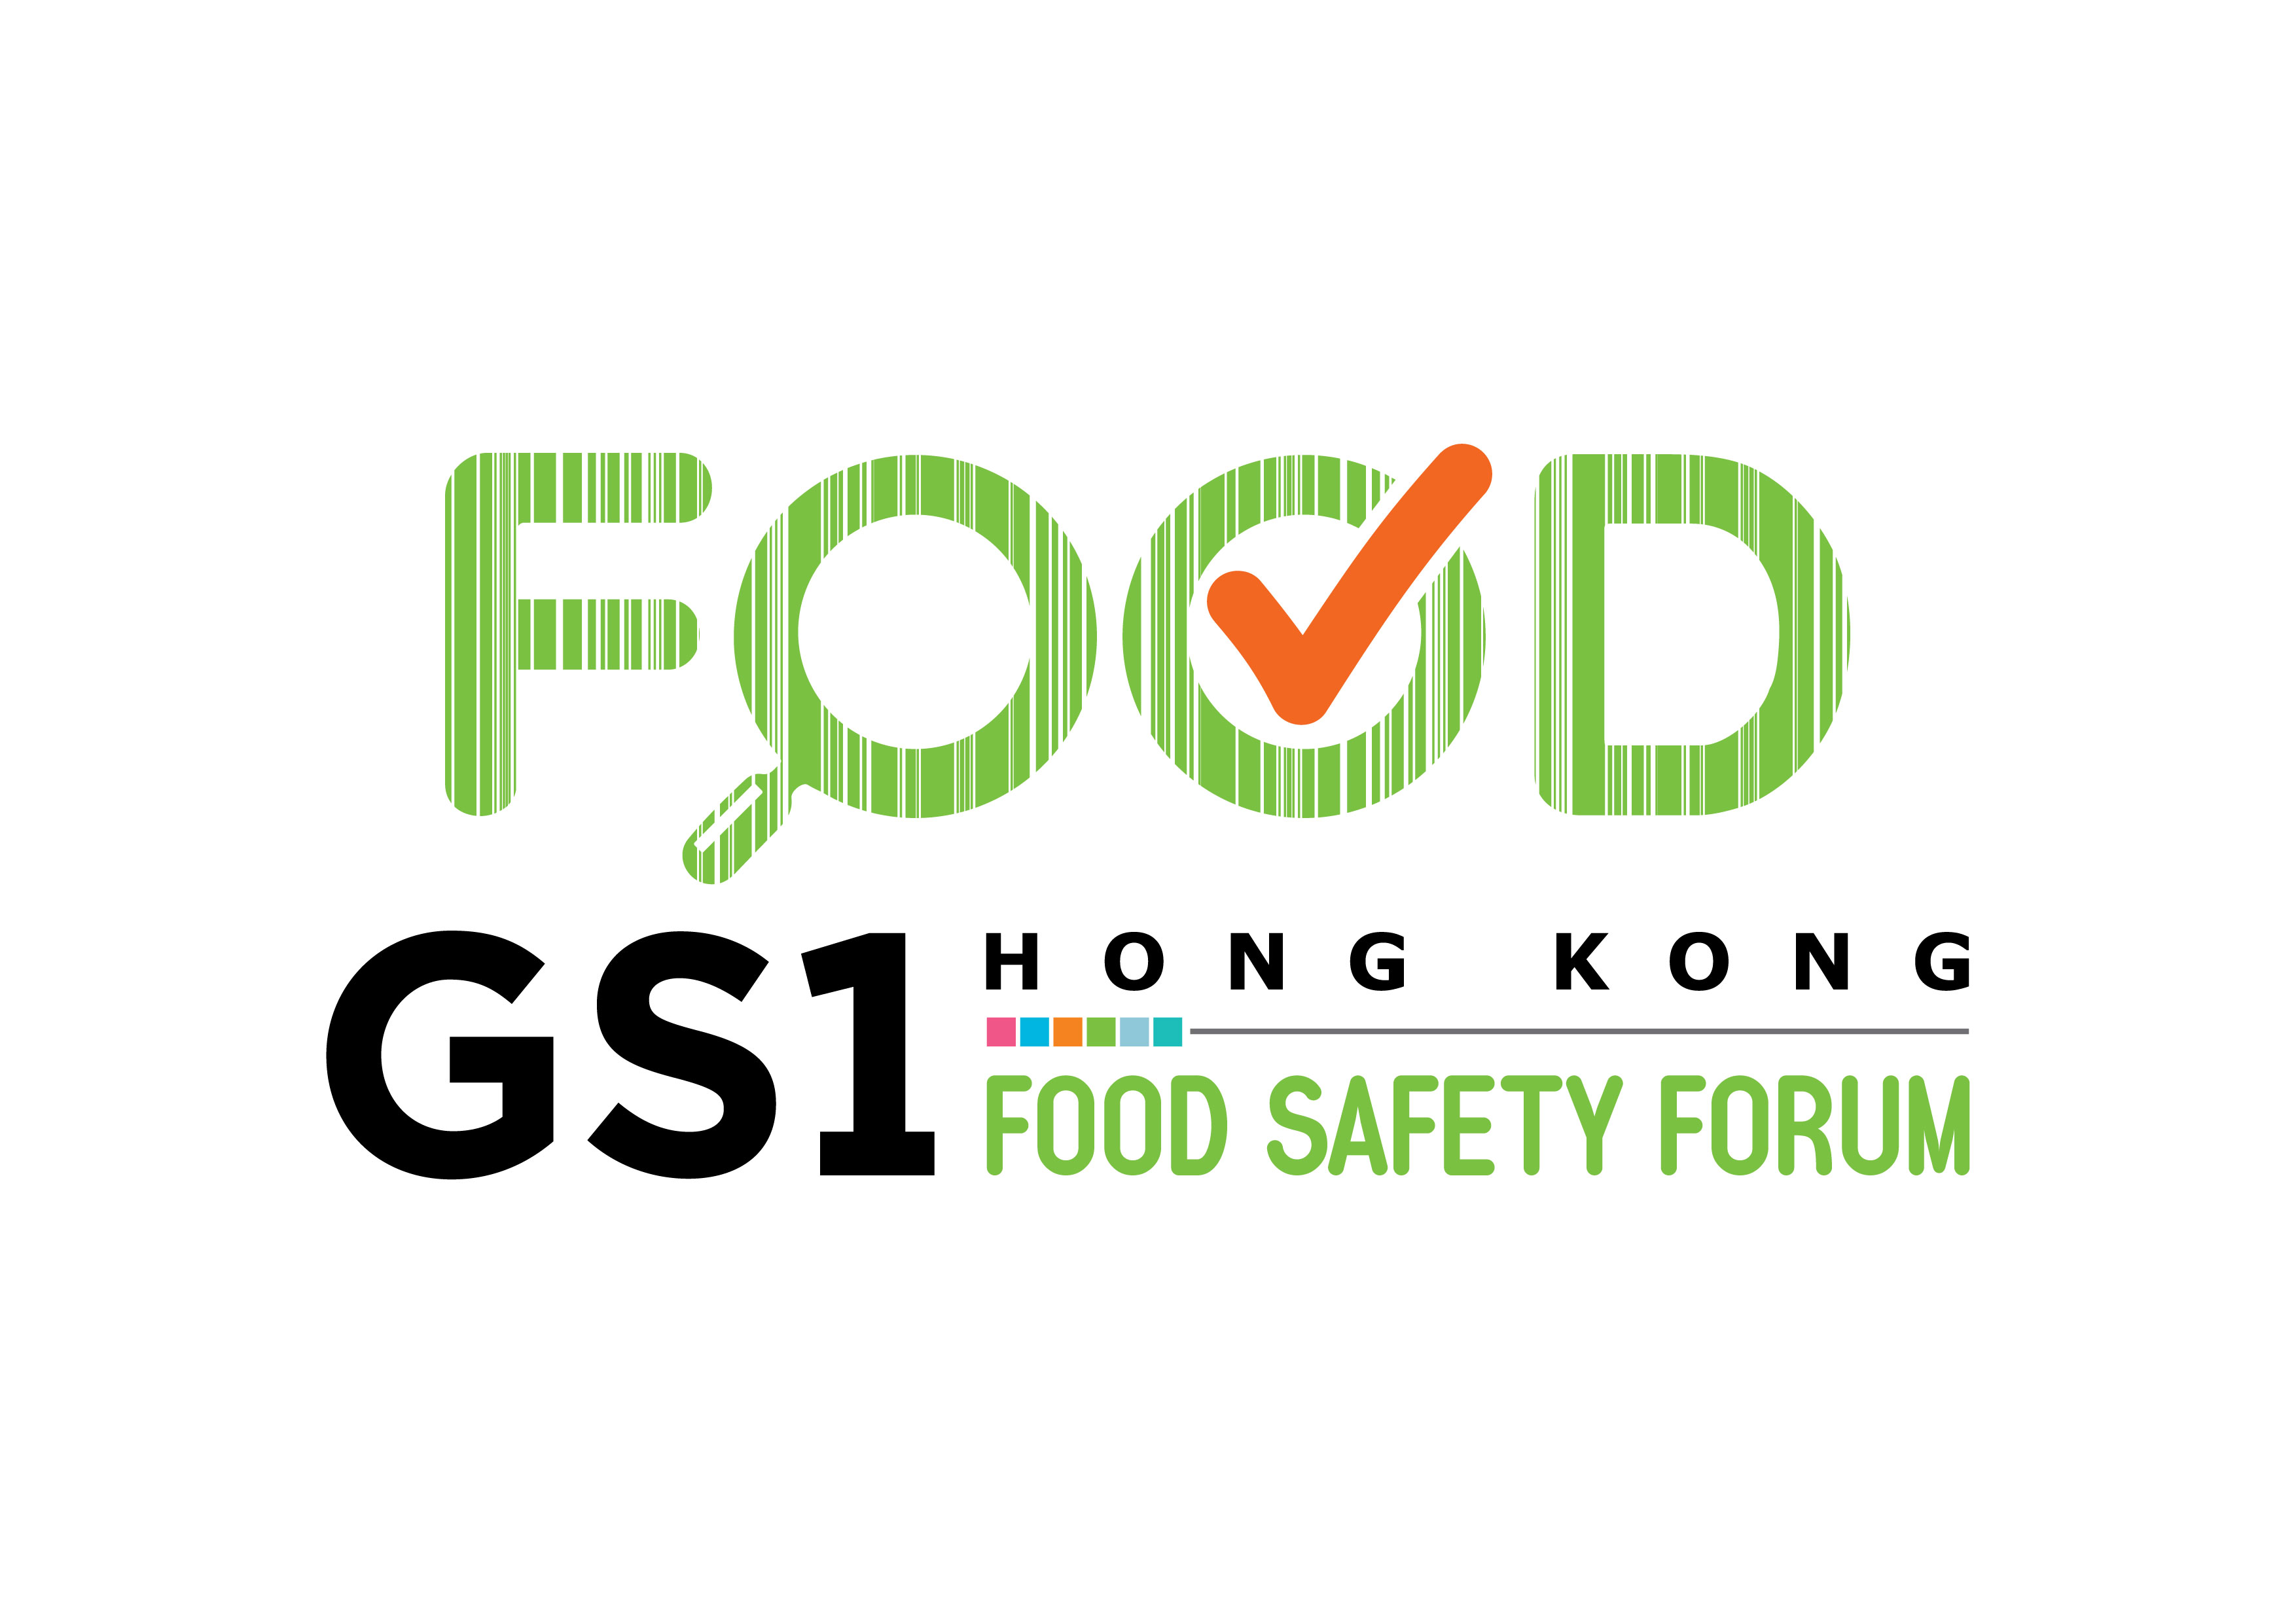 Food Safety Forum